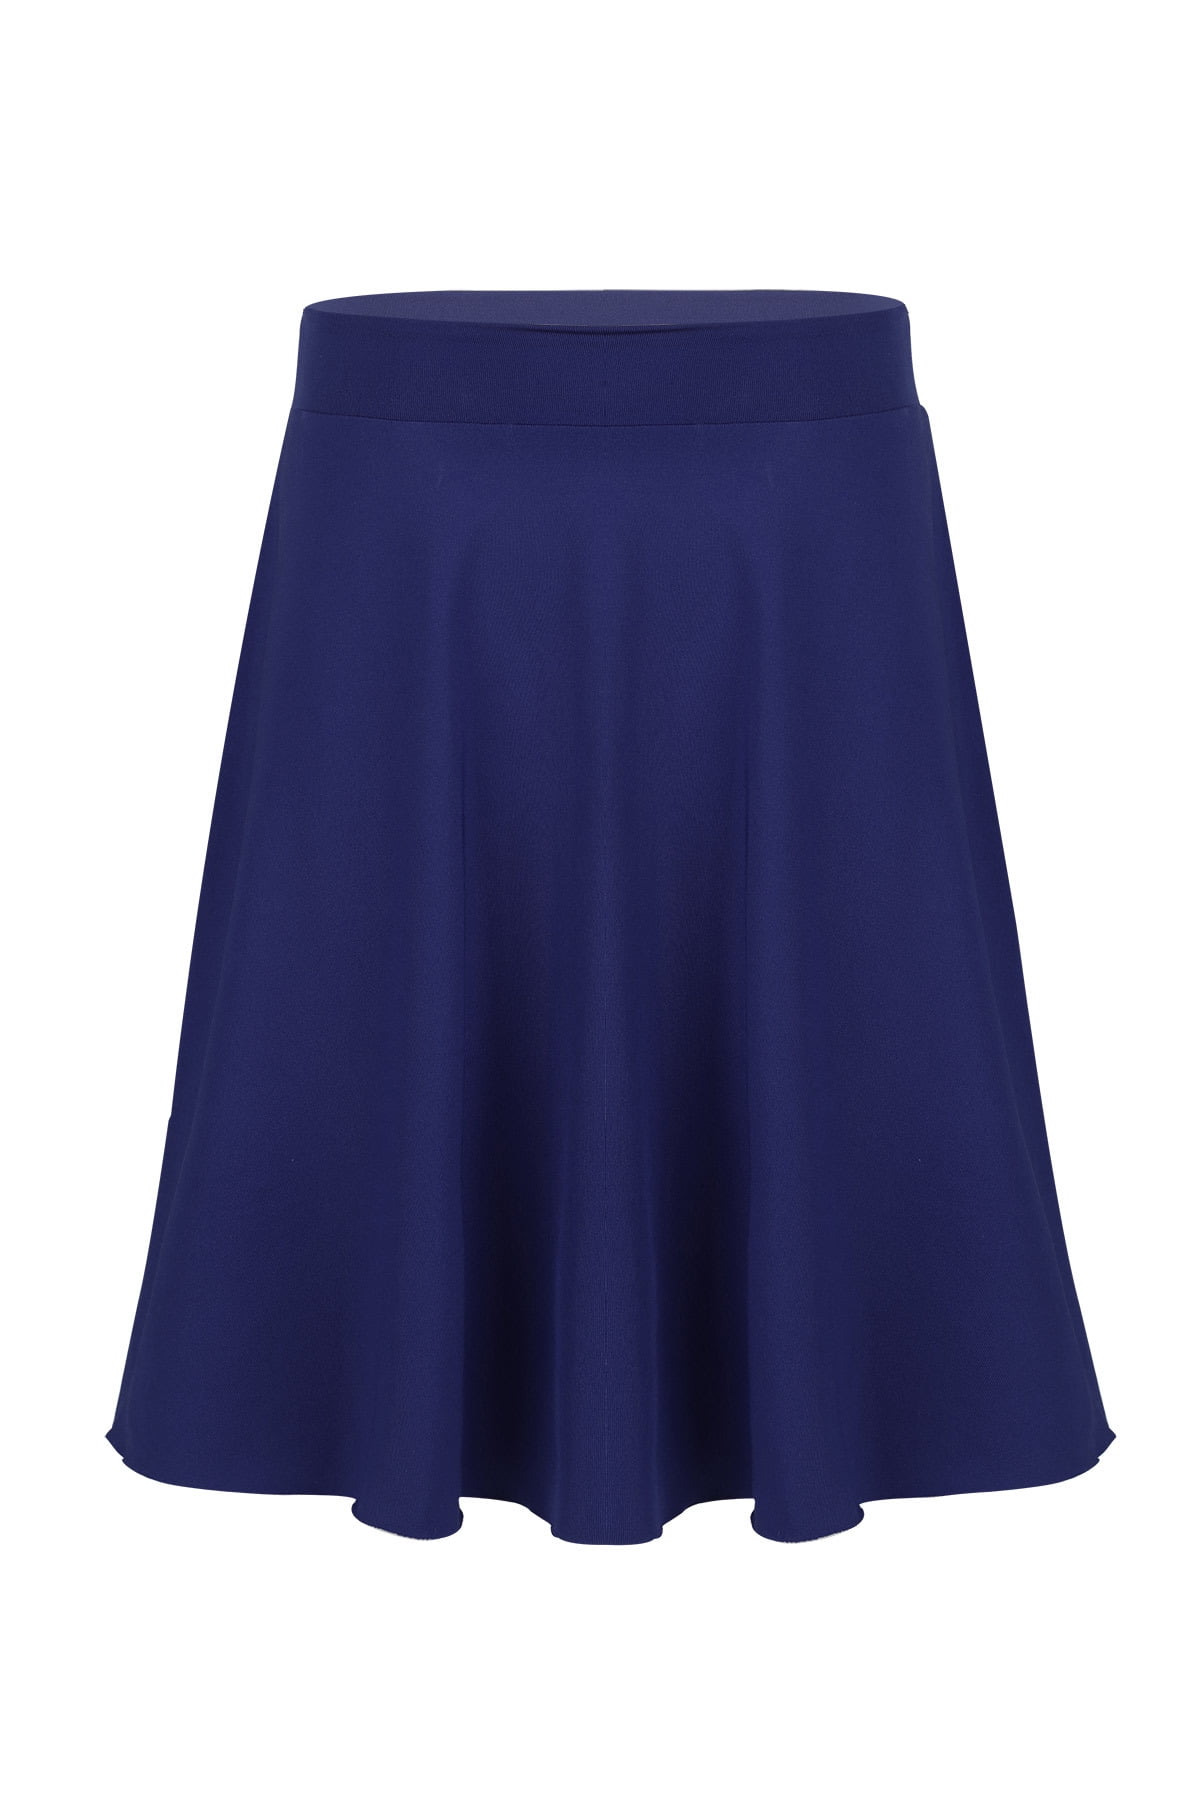 MSemis Big Girls Knee Length Skater Skirts Navy_Blue 6 - Walmart.com